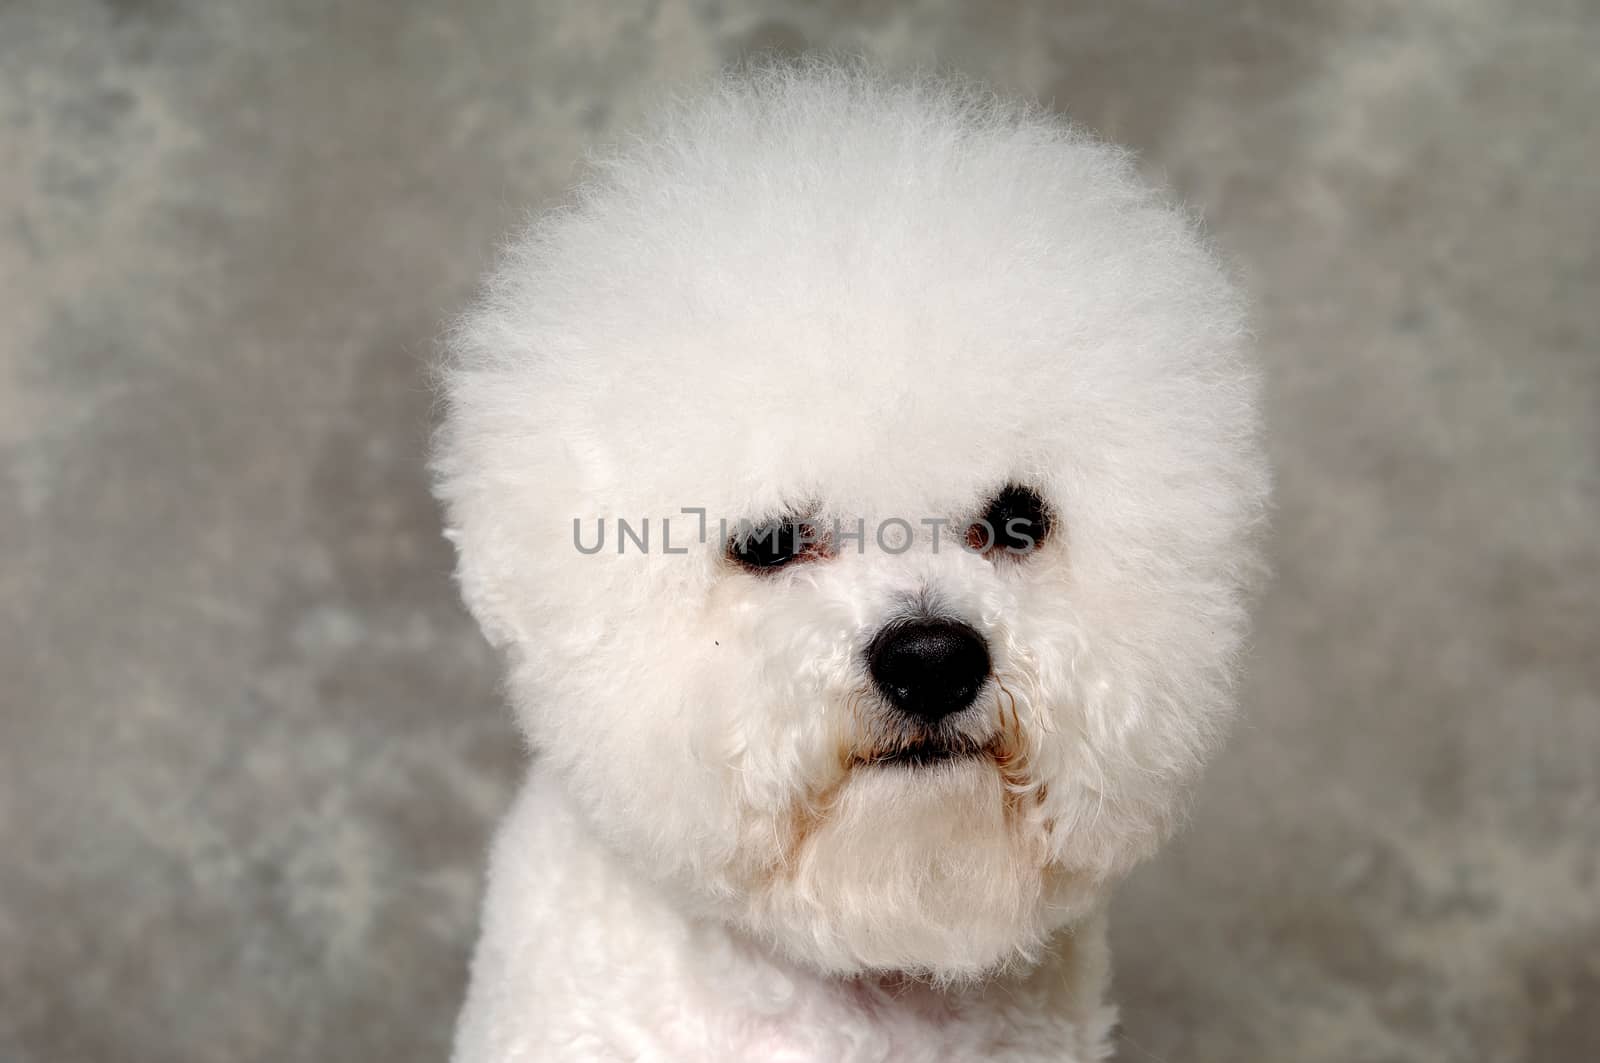 Face of a sad Poodle dog